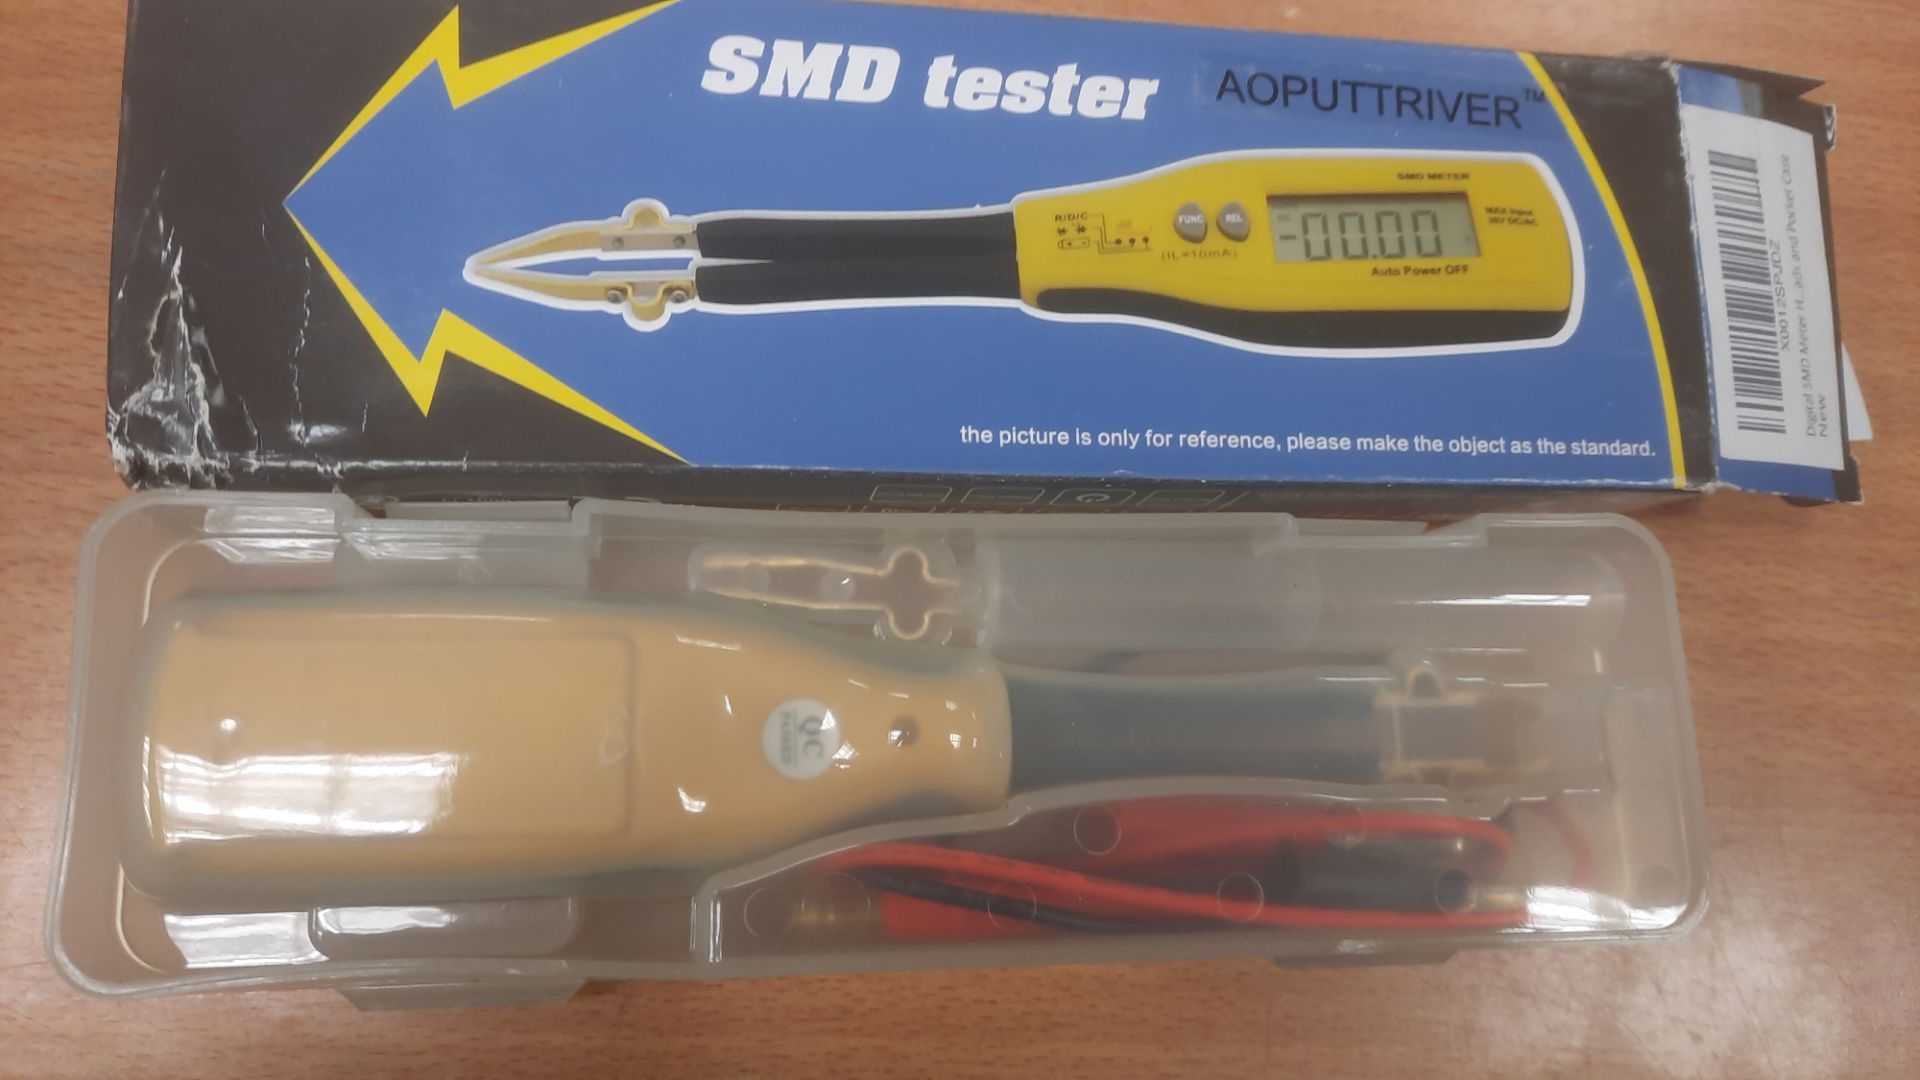 Autoputtriver SMD Tester